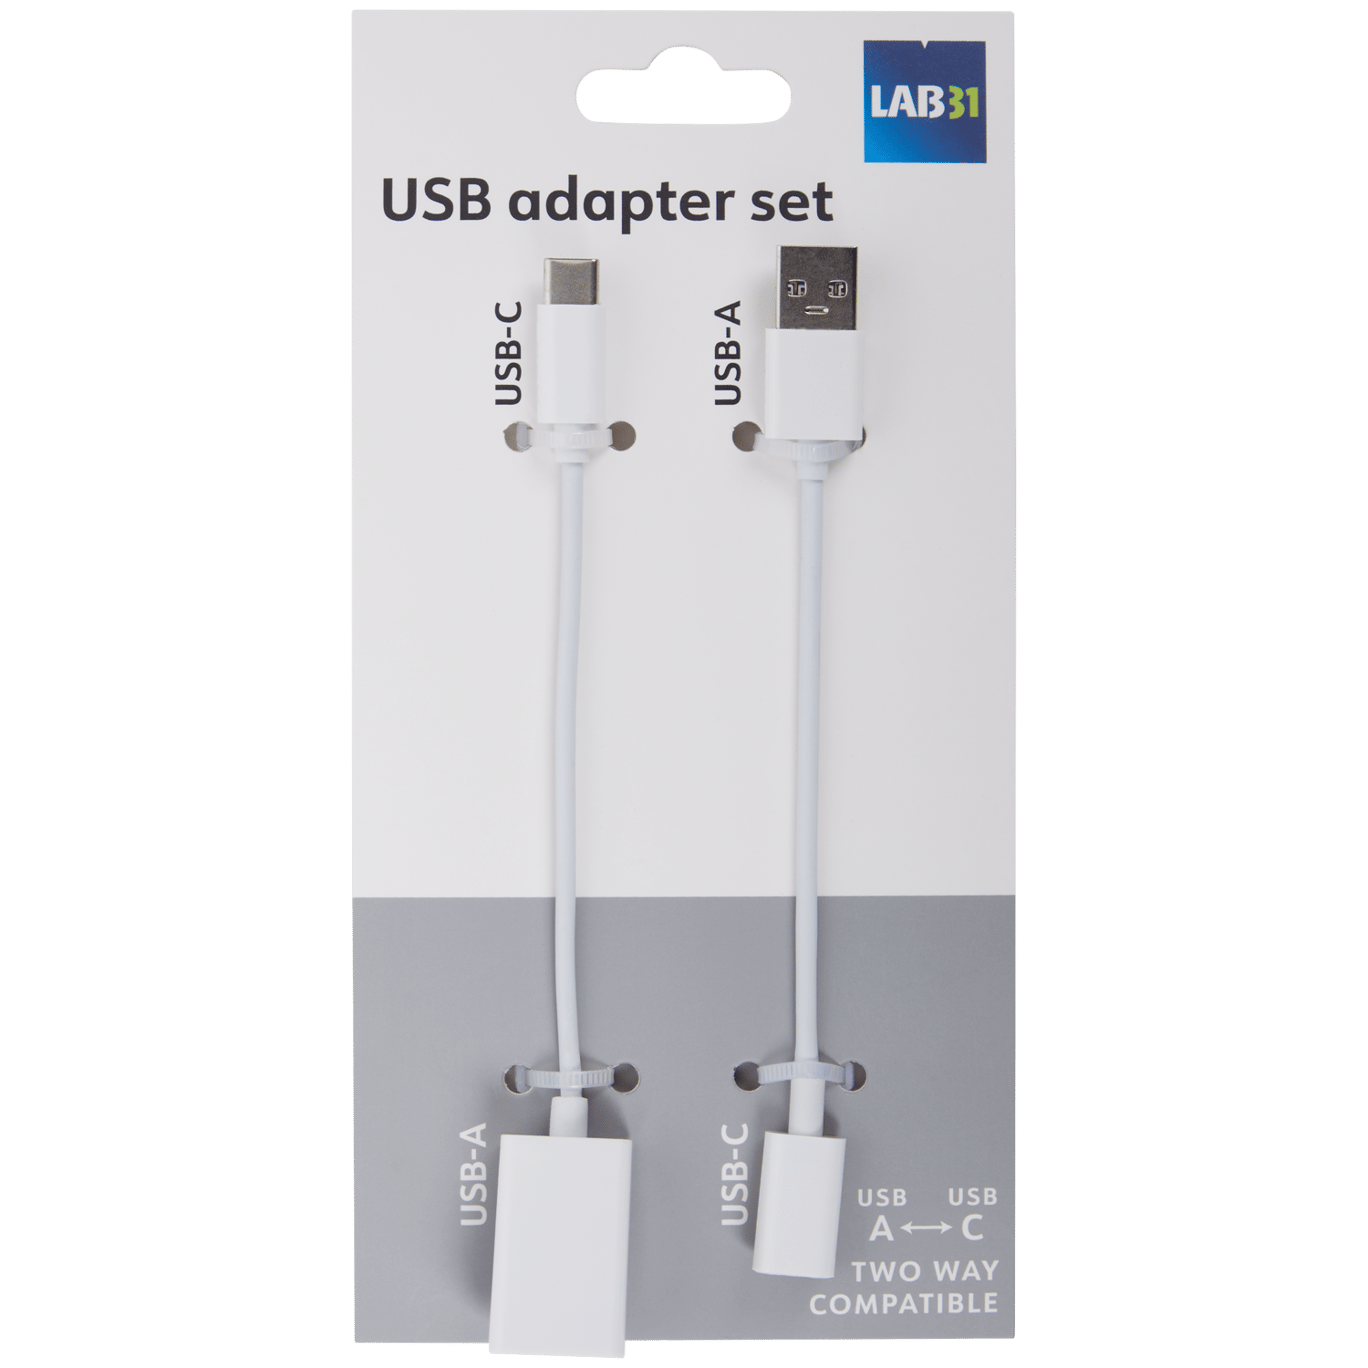 Lab31 USB-C Adapterset